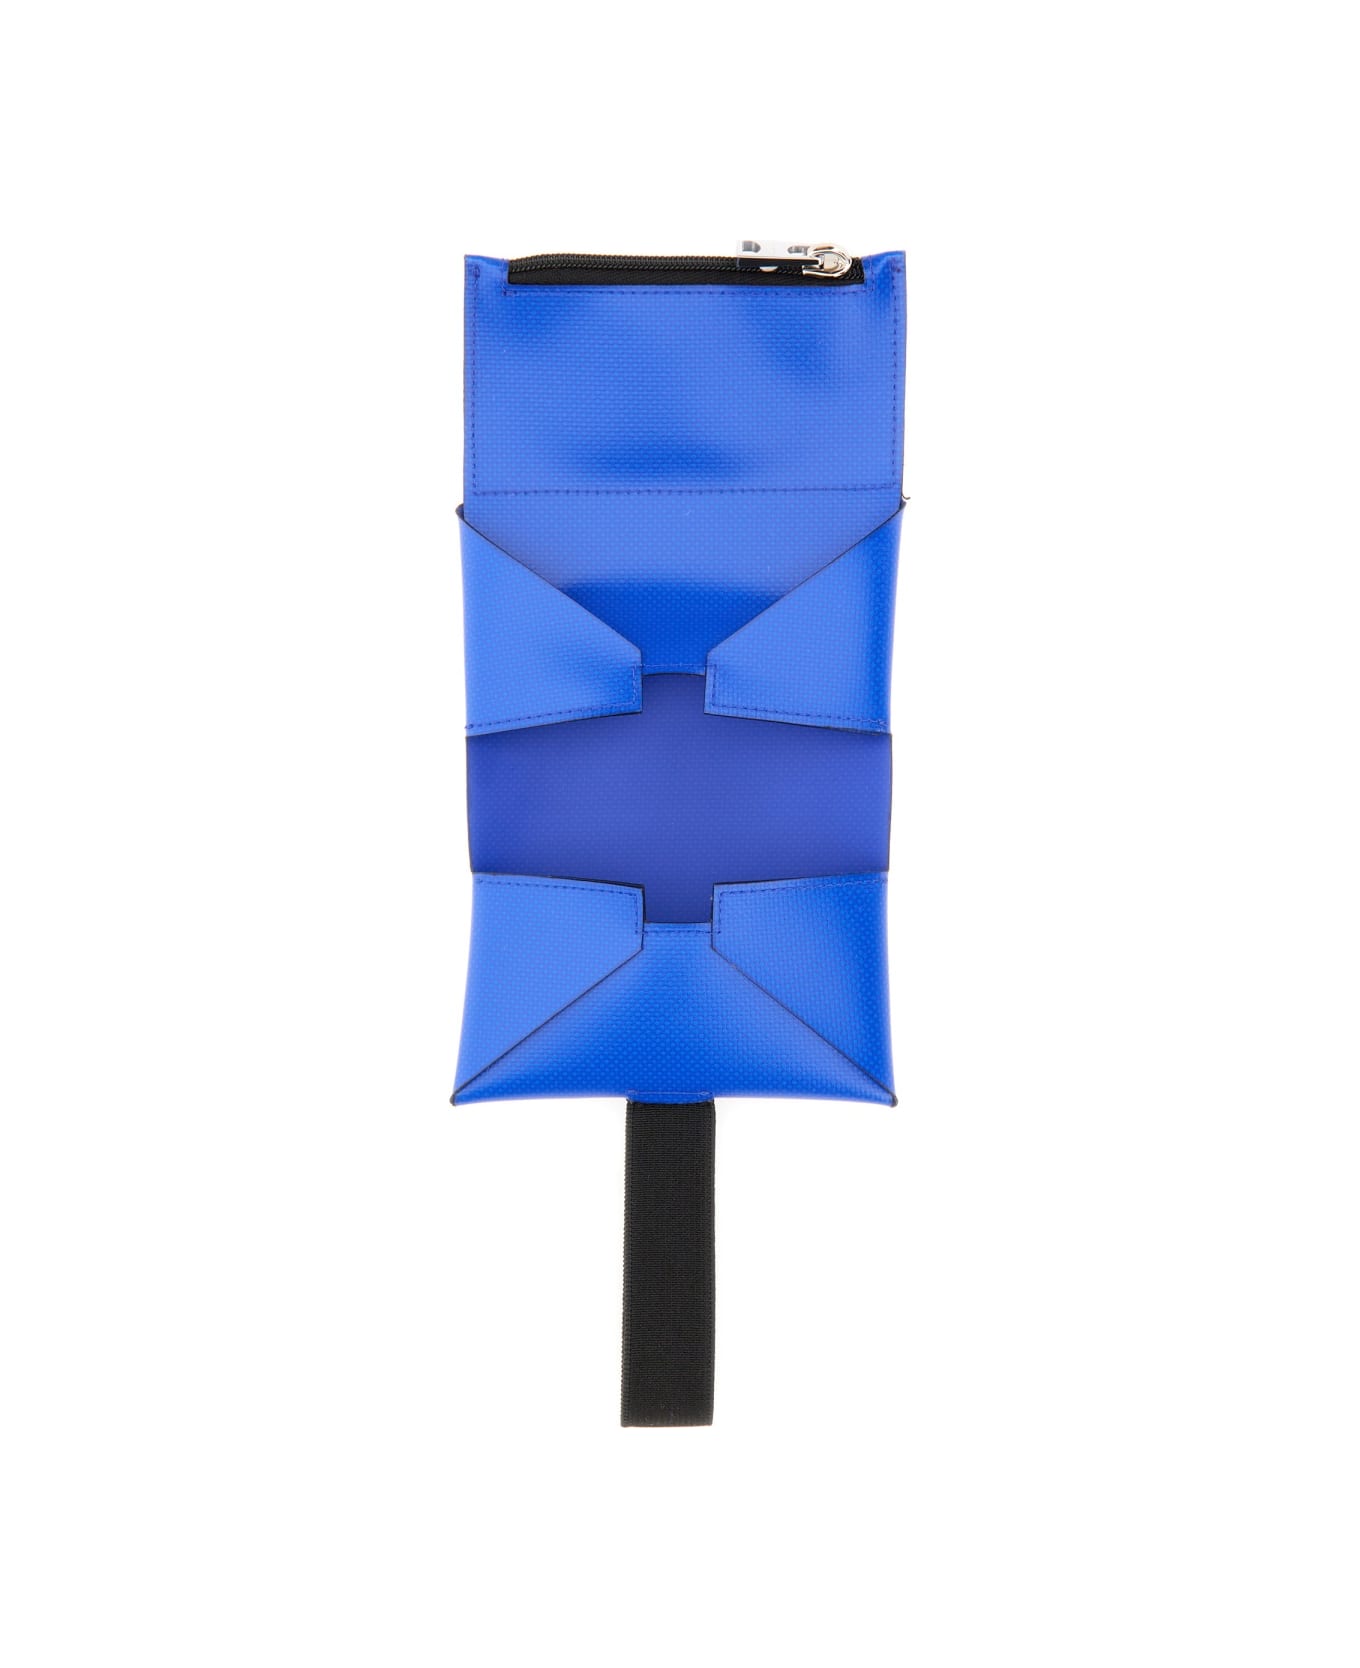 Marni Origami Wallet - BLUE